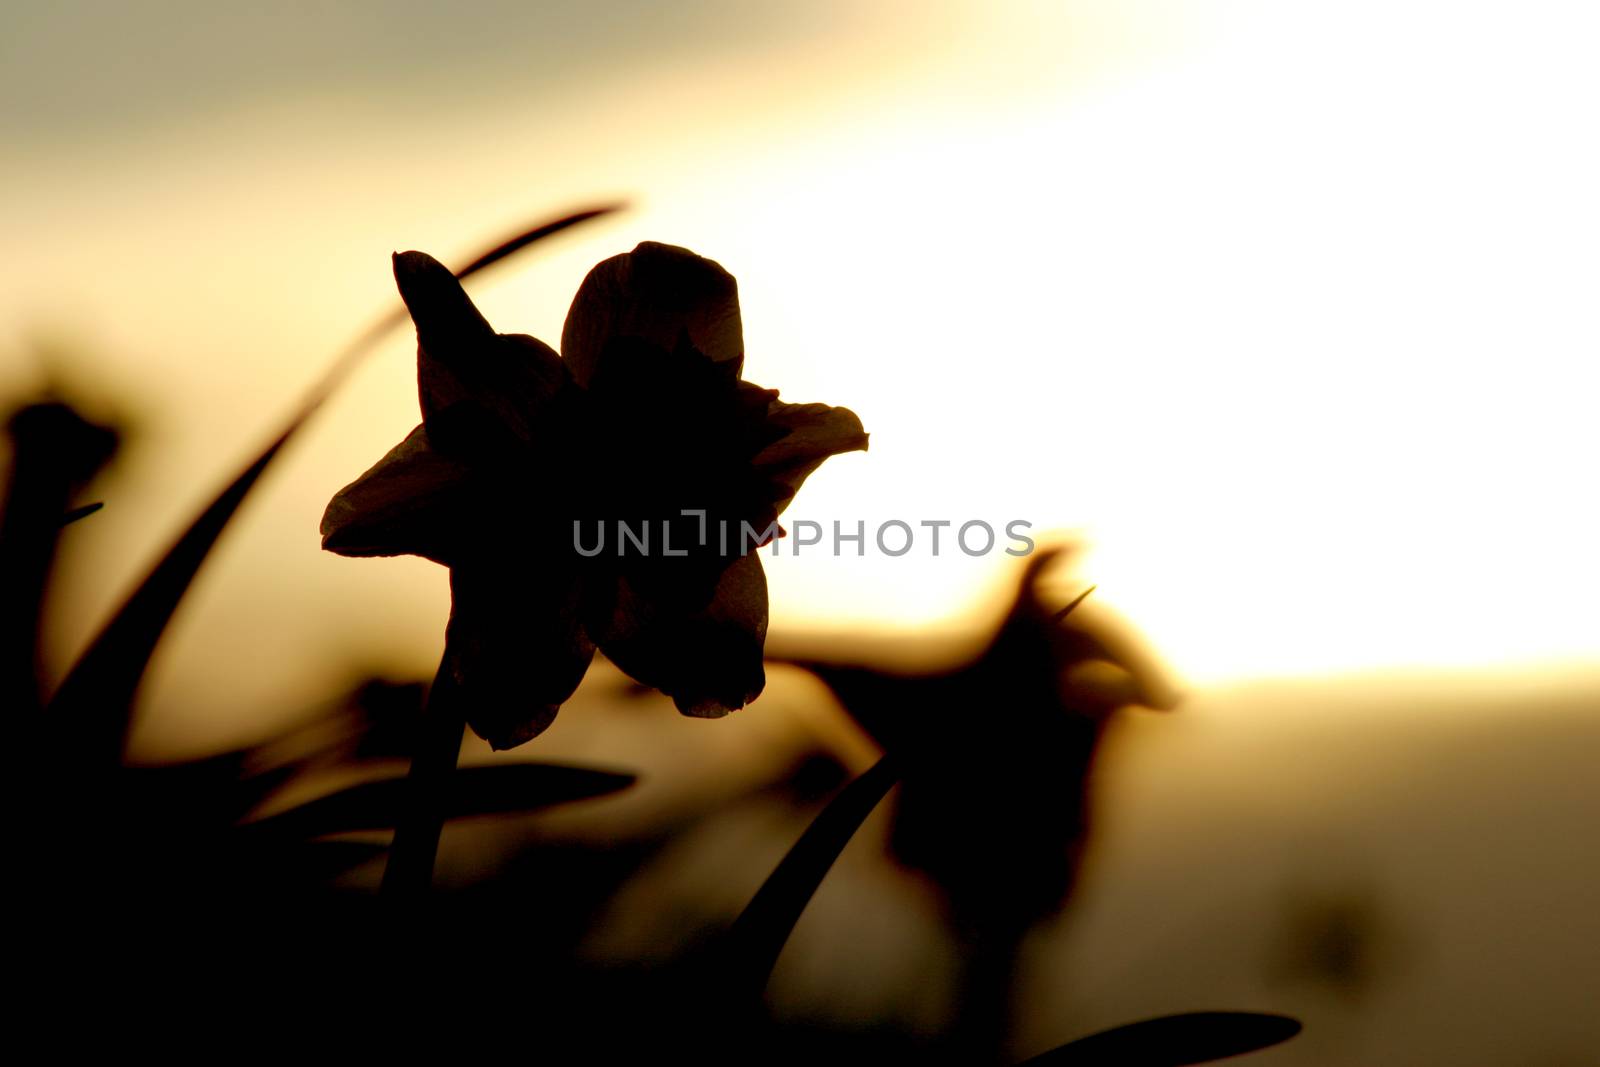 A single daffodil silhouette